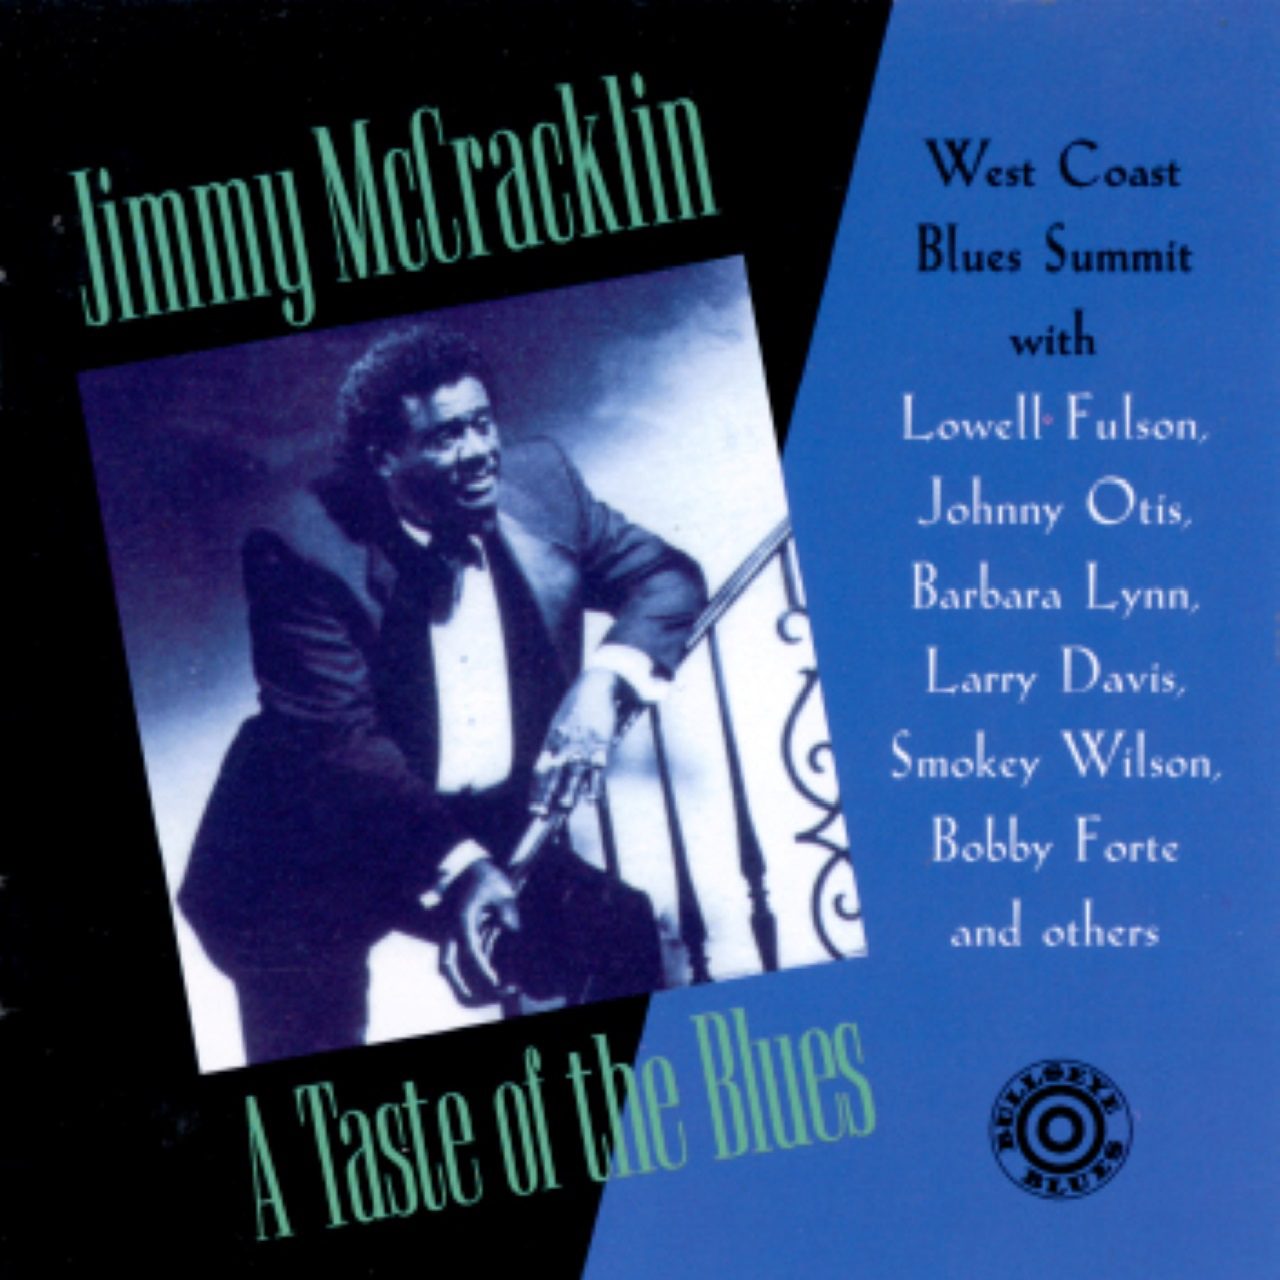 Jimmy McCracklin – A Taste Of The Blues cover album